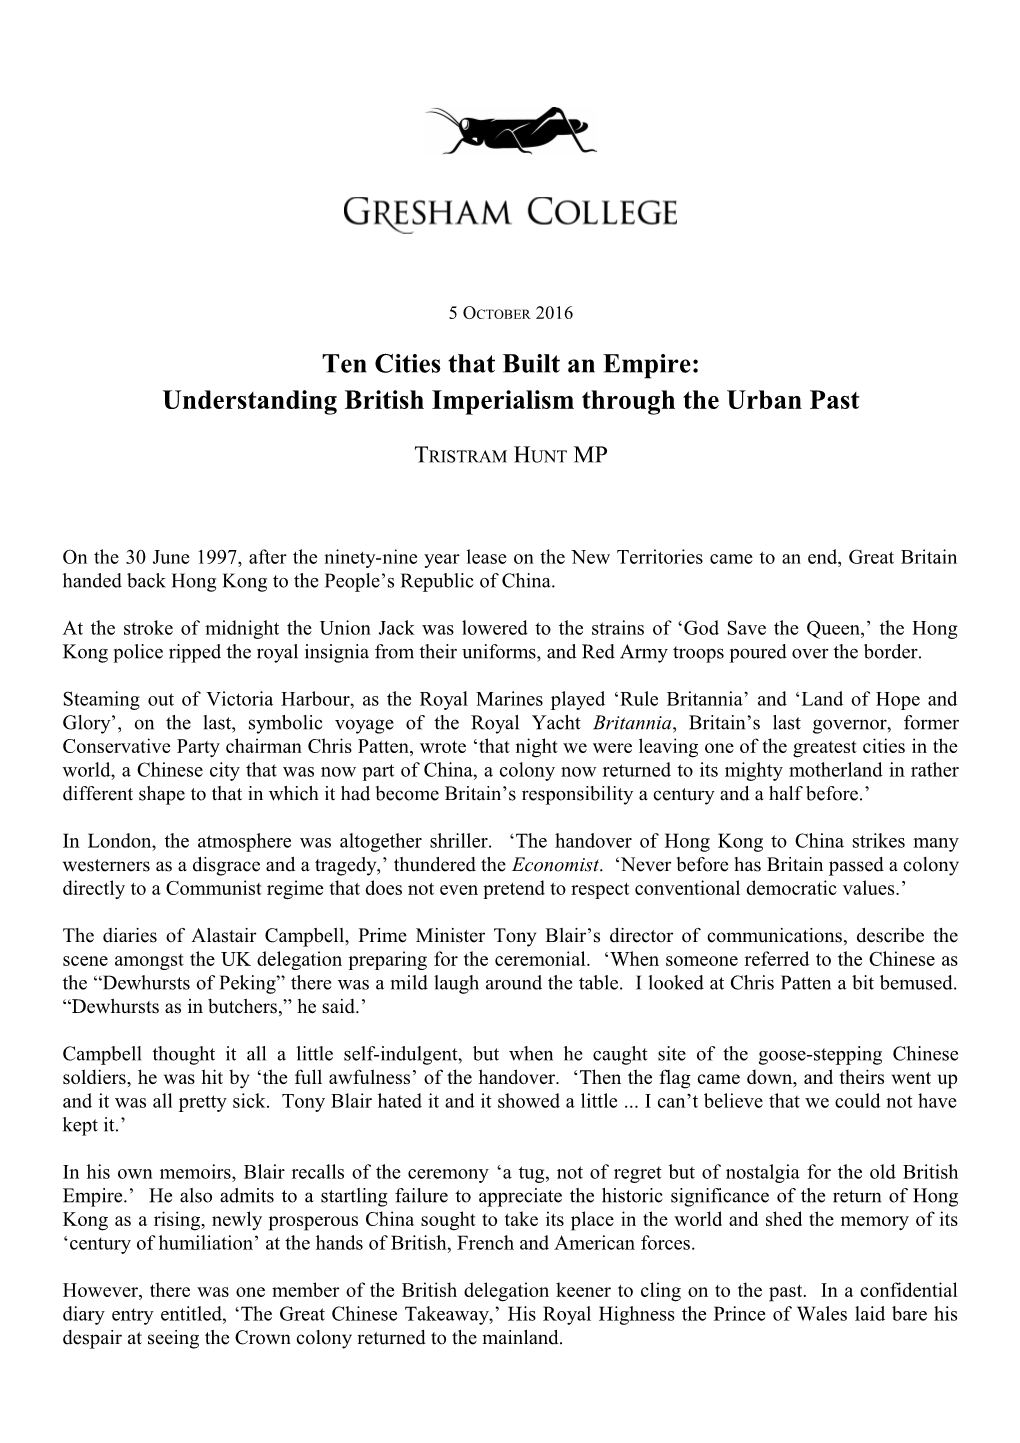 Ten Cities That Built an Empire: Understanding British Imperialism Through the Urban Past